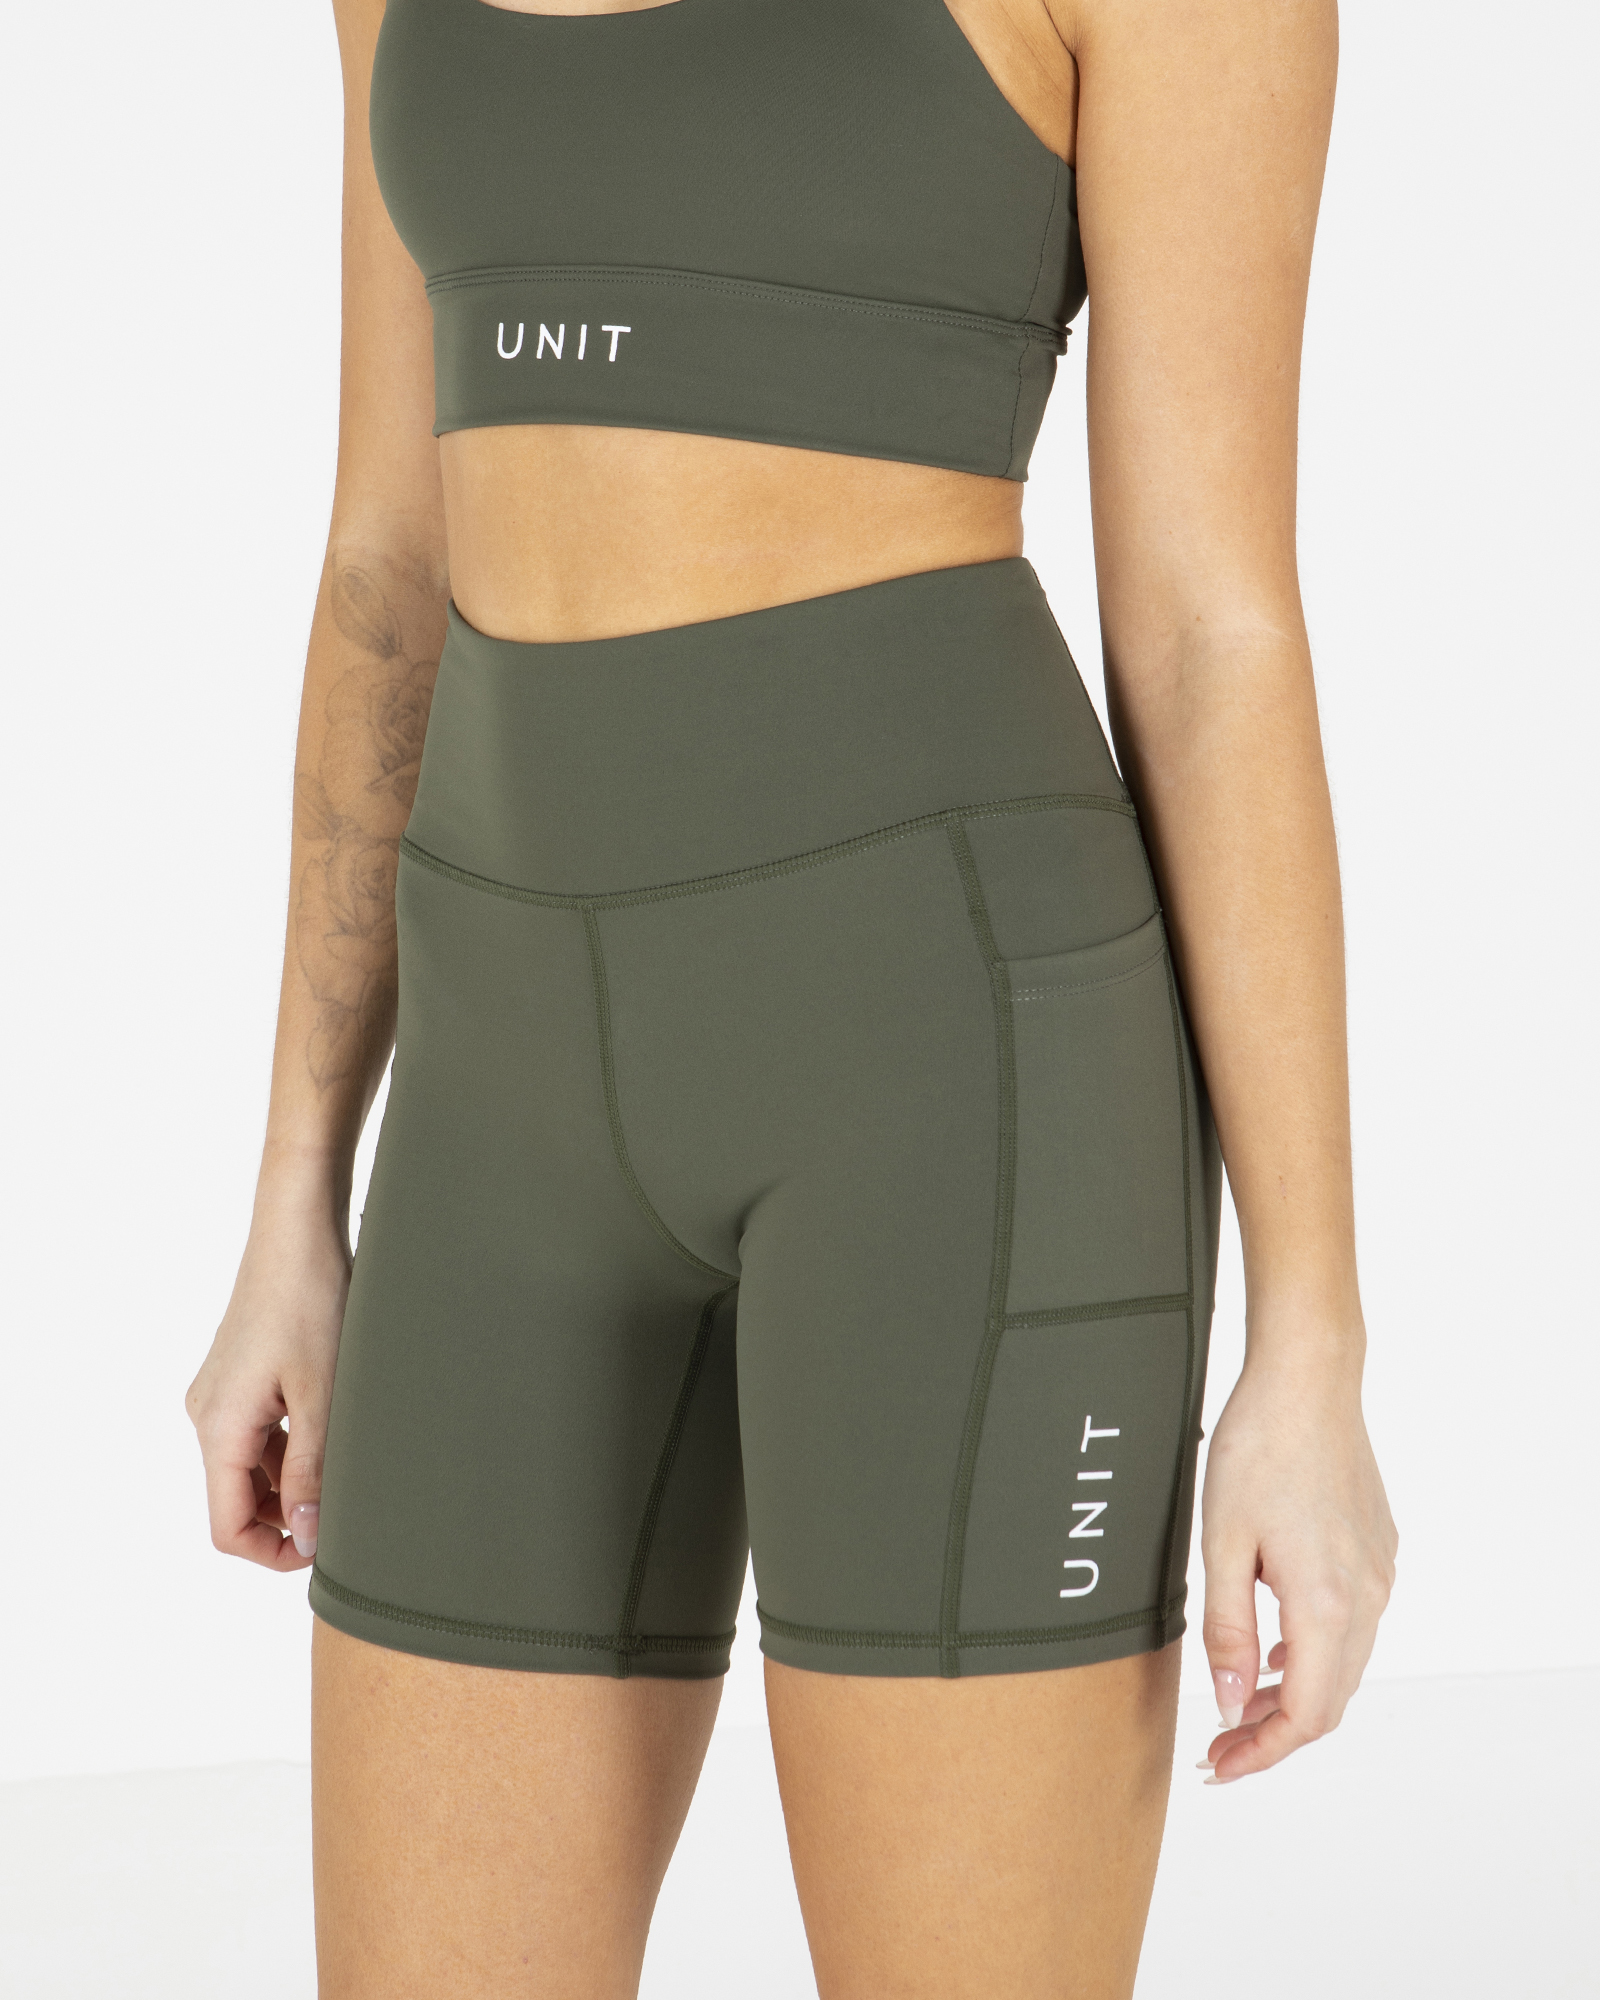 Unit Unit Energy Ladies Active Sports Shorts - Military